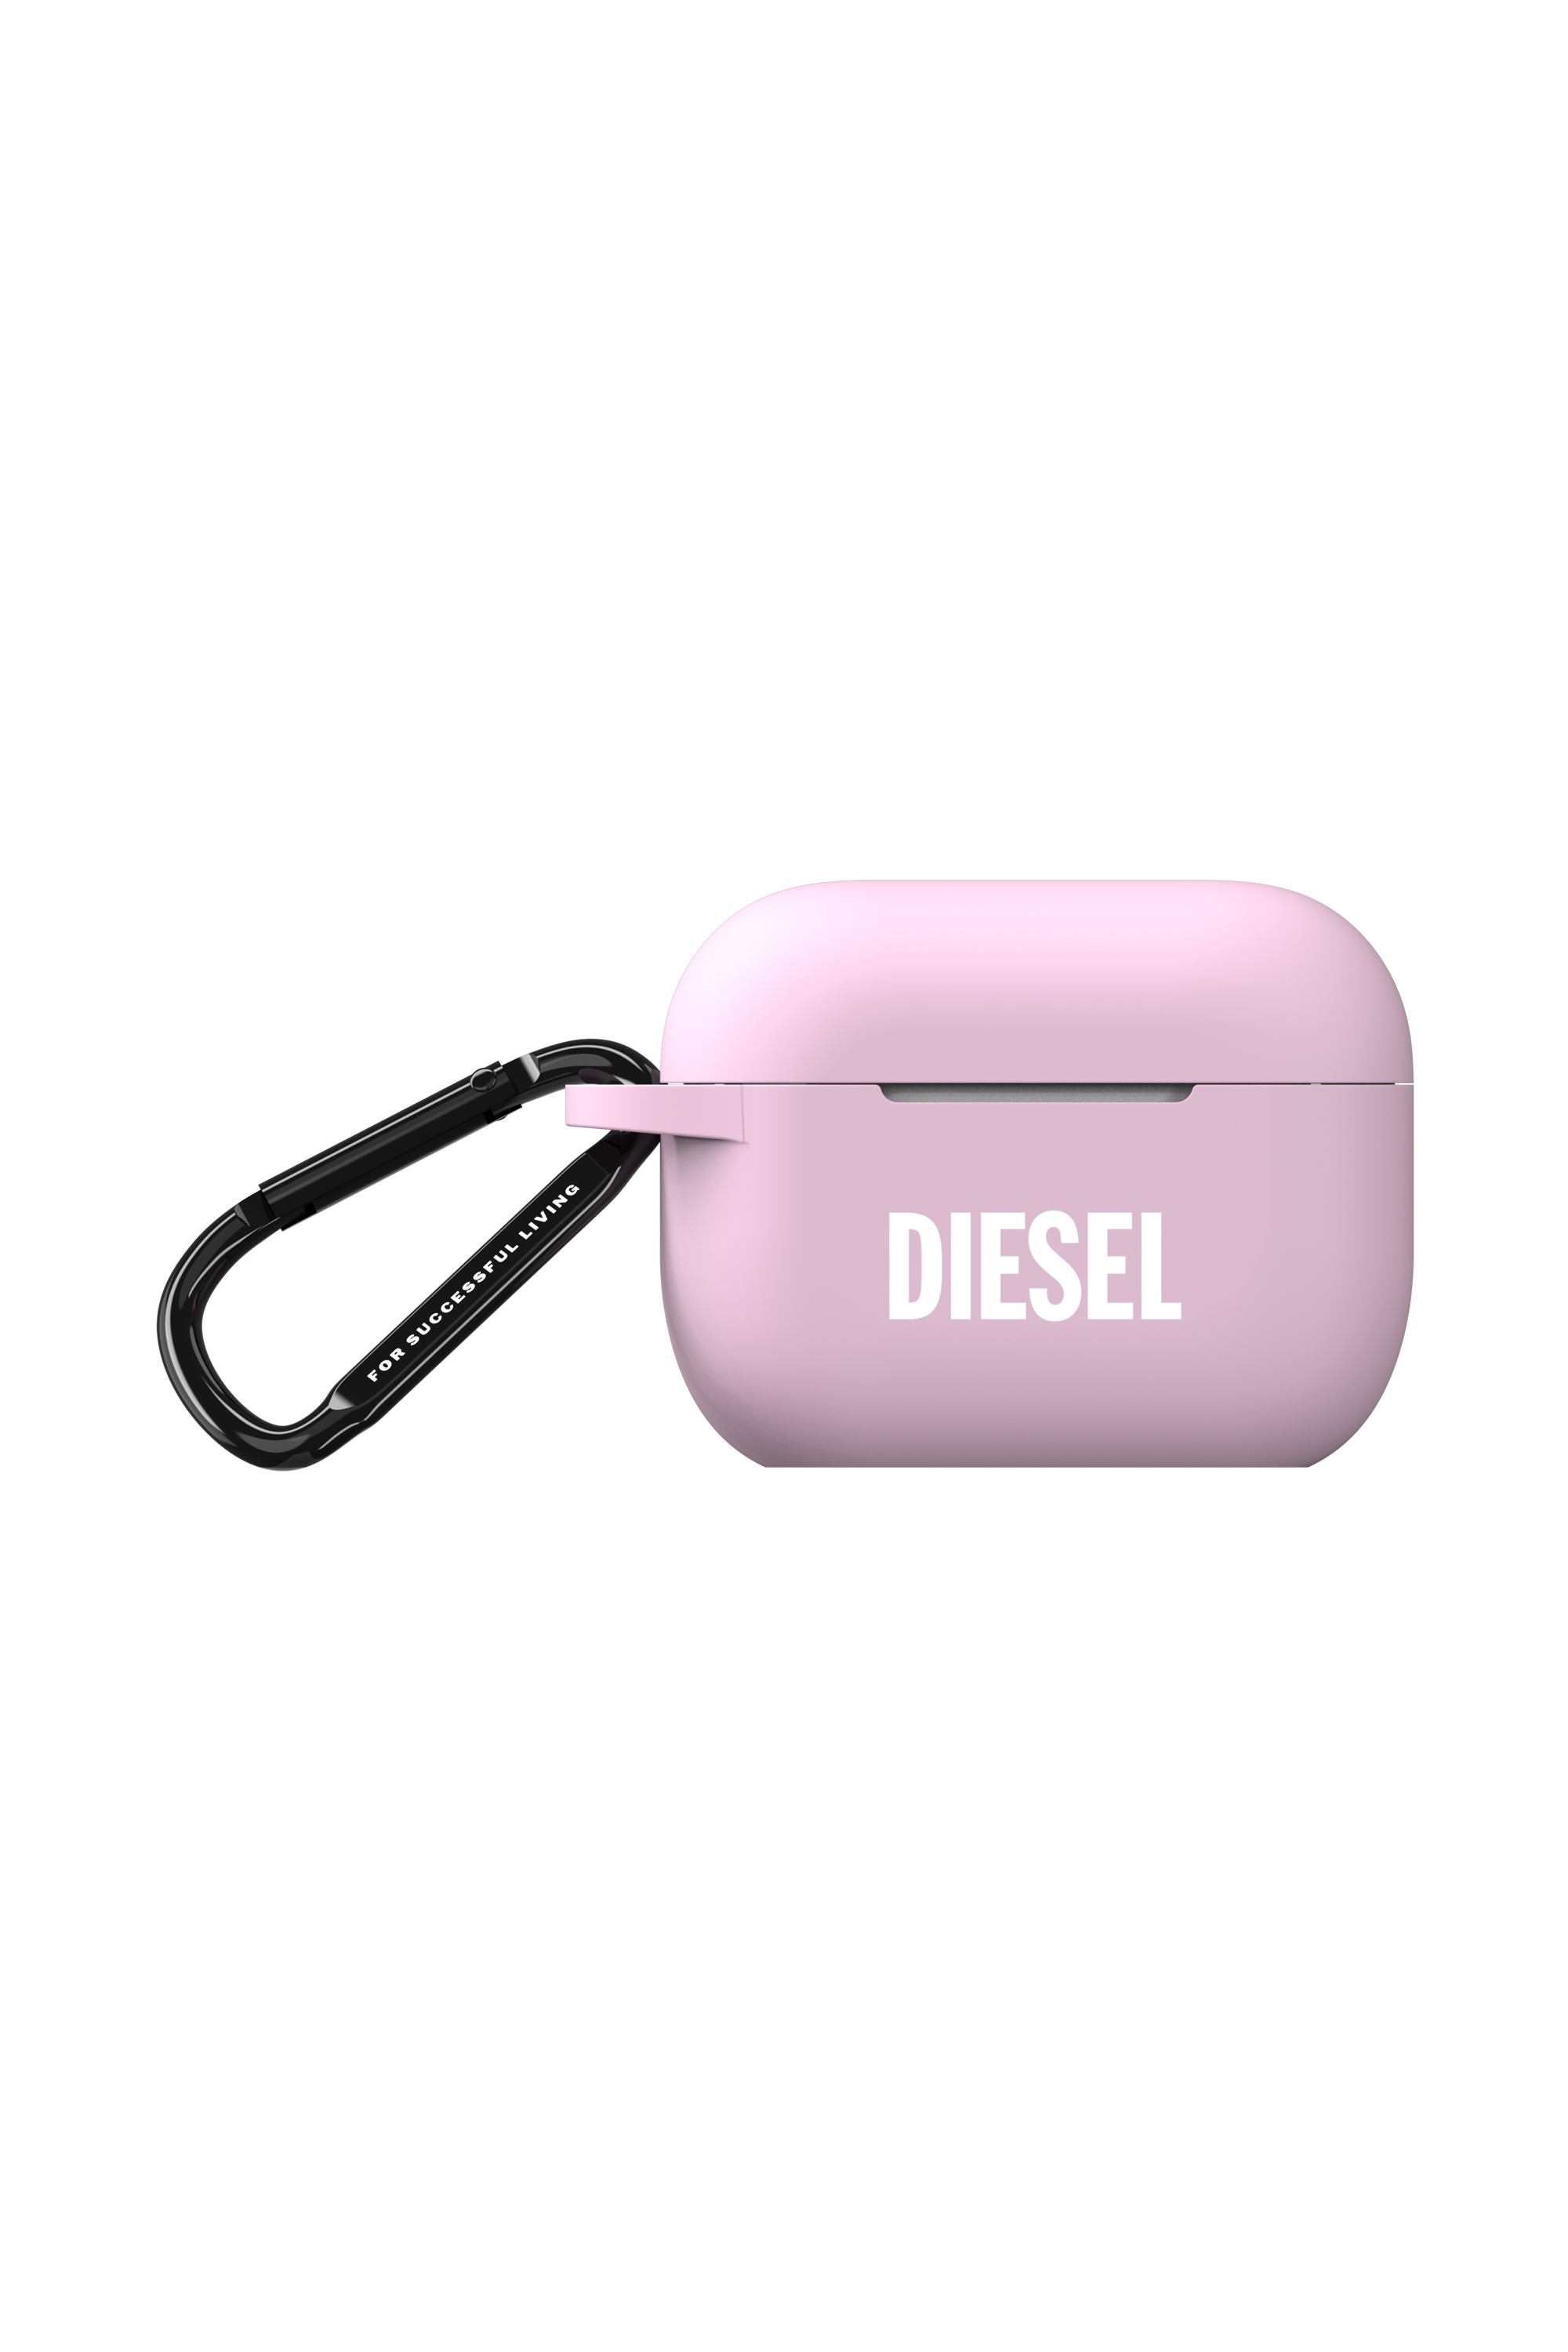 Diesel - Custodia in silicone per AirPods Pro - Cover - Unisex - Rosa